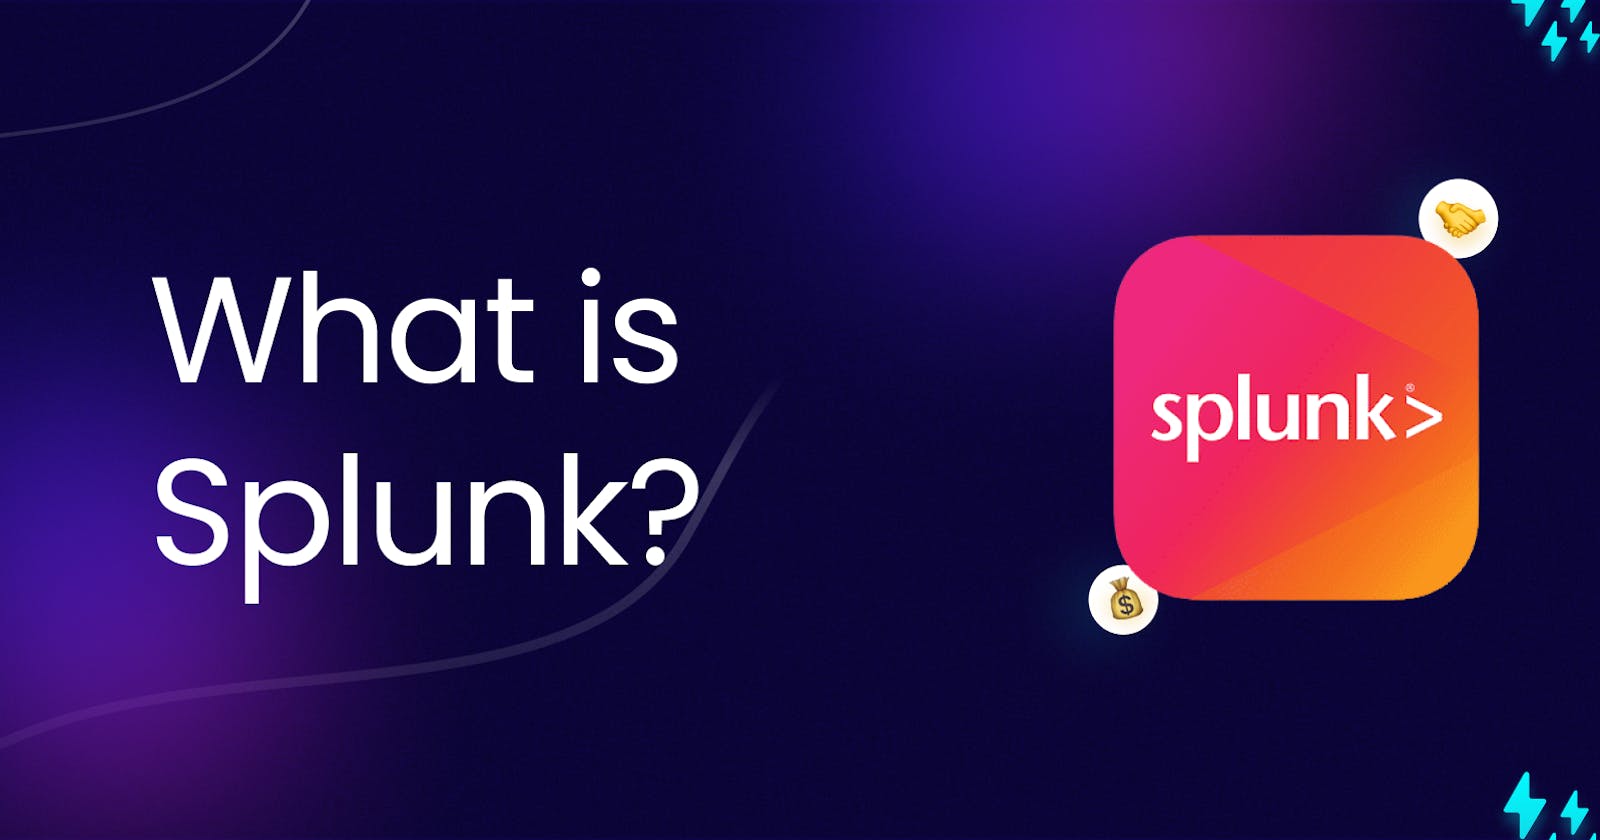 Splunk: Empowering Data Analysis and Operational Intelligence